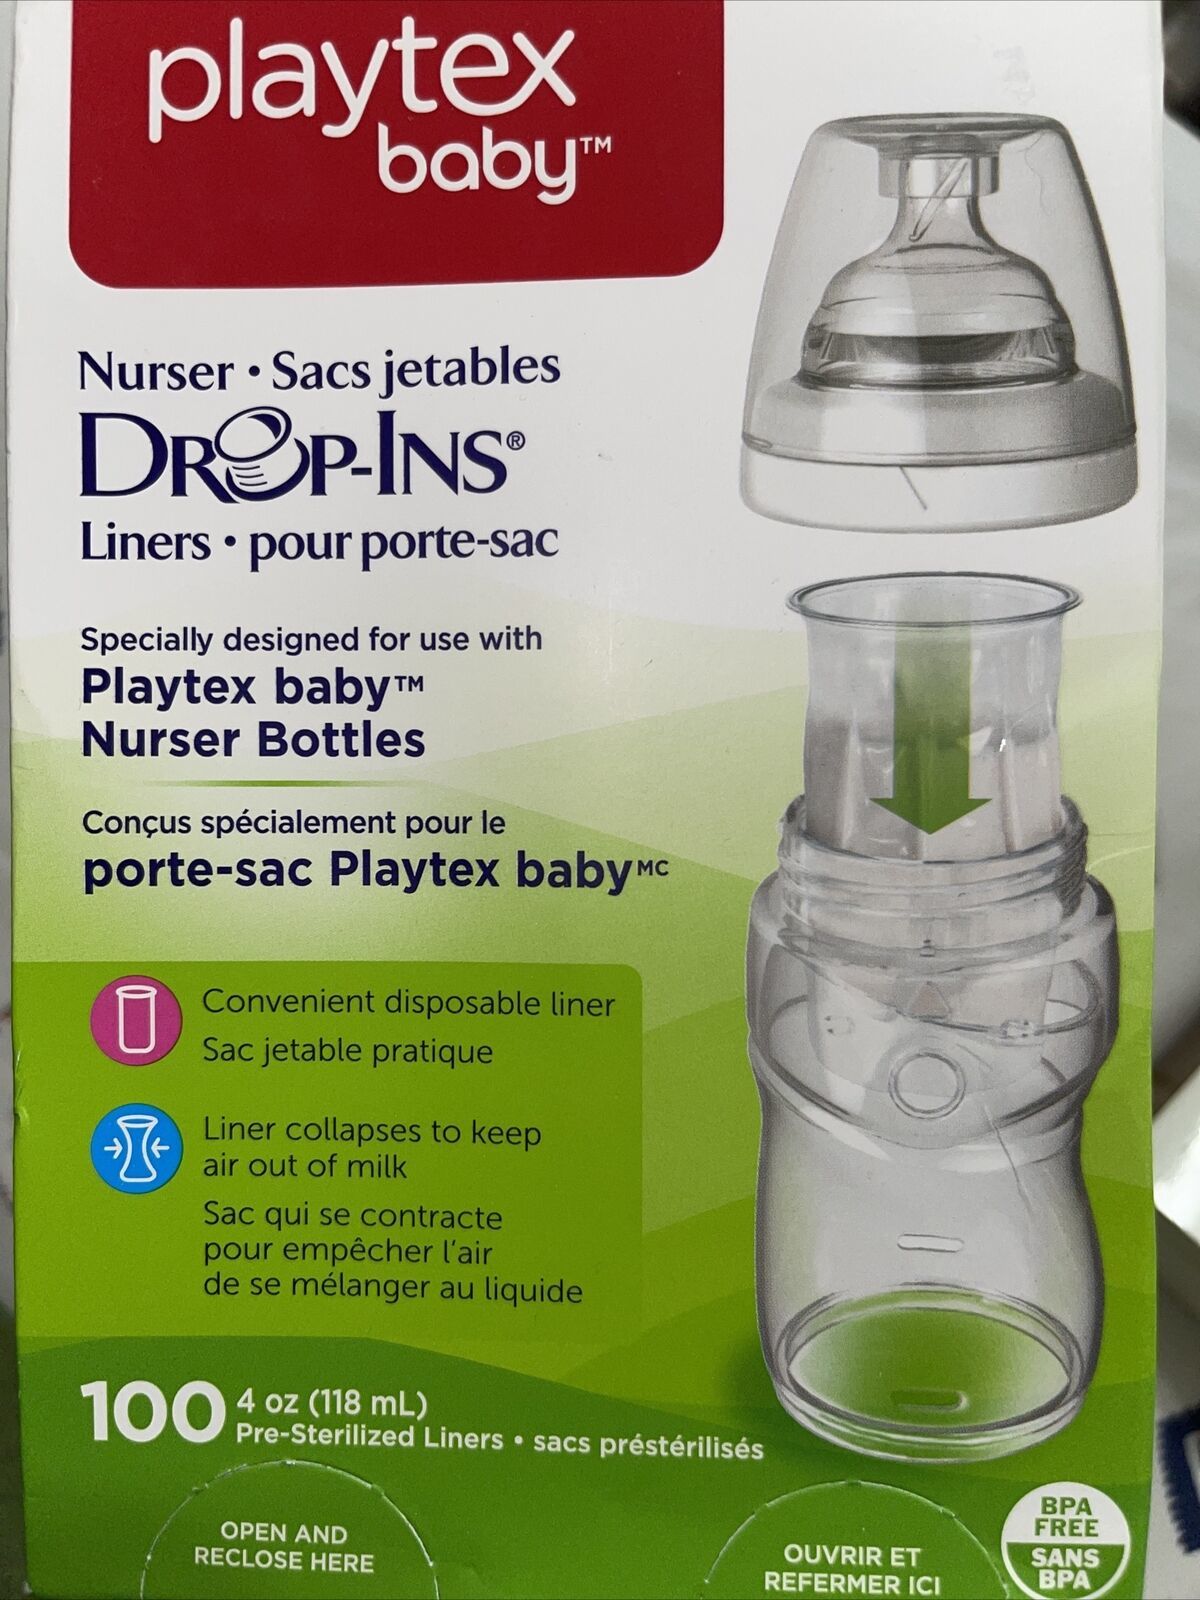 2 NEW 4oz GERBER DISPOSABLE DROP-IN STYLE Nurser BABY Bottles Latex Nipples VTG 